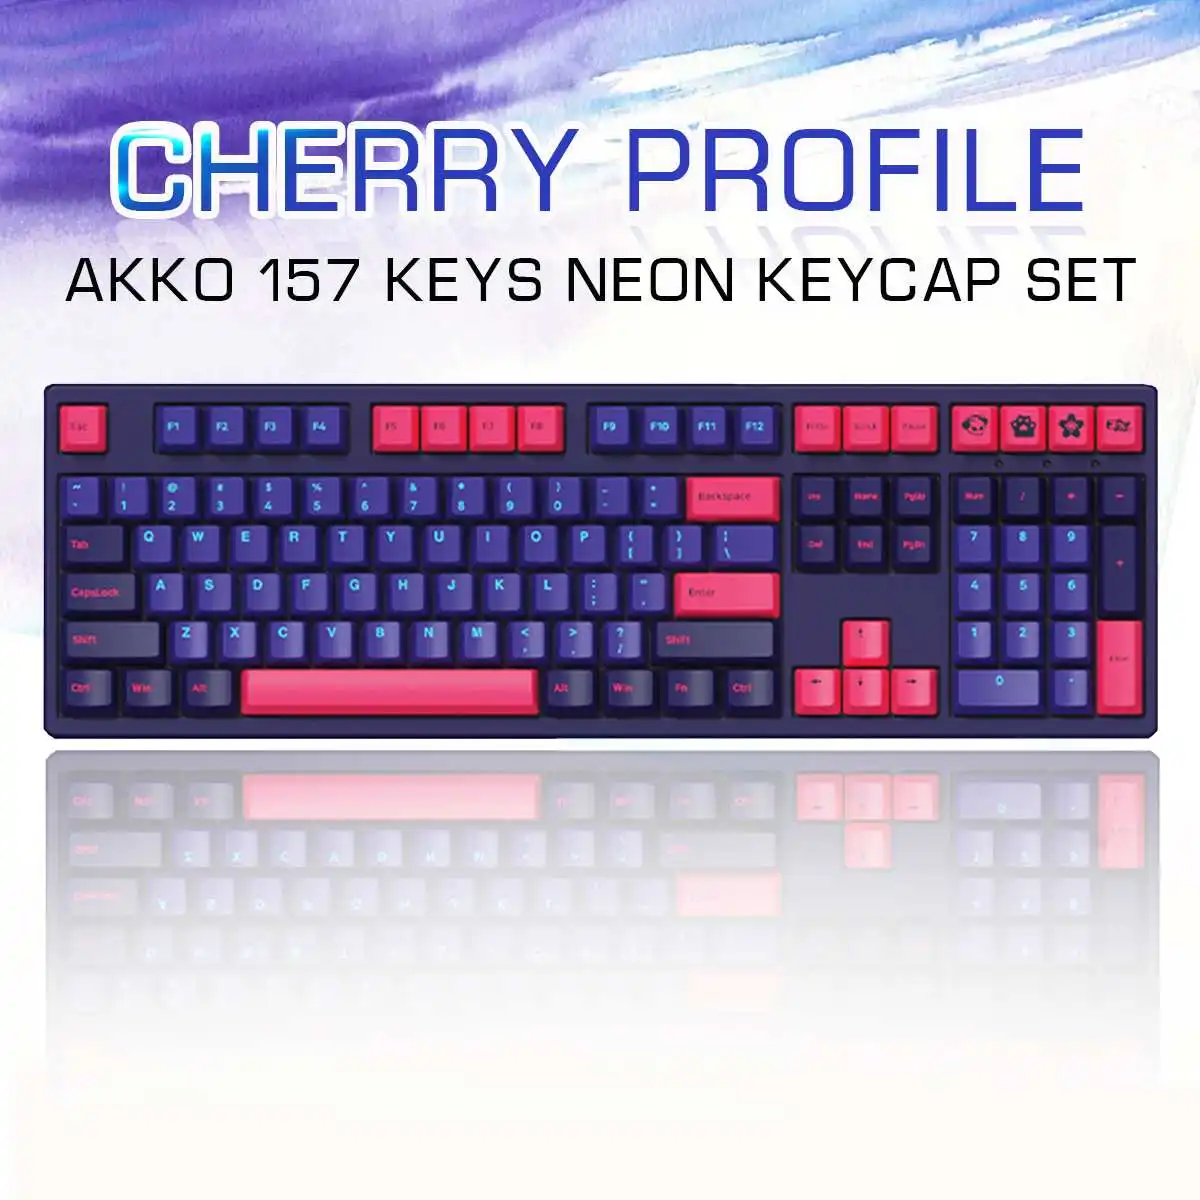 

AKKO 157 Keys Neon Keycap Set Cherry Profile PBT Two Color Molding Keycaps for Mechanical Keyboard Changed WIN key to APP key